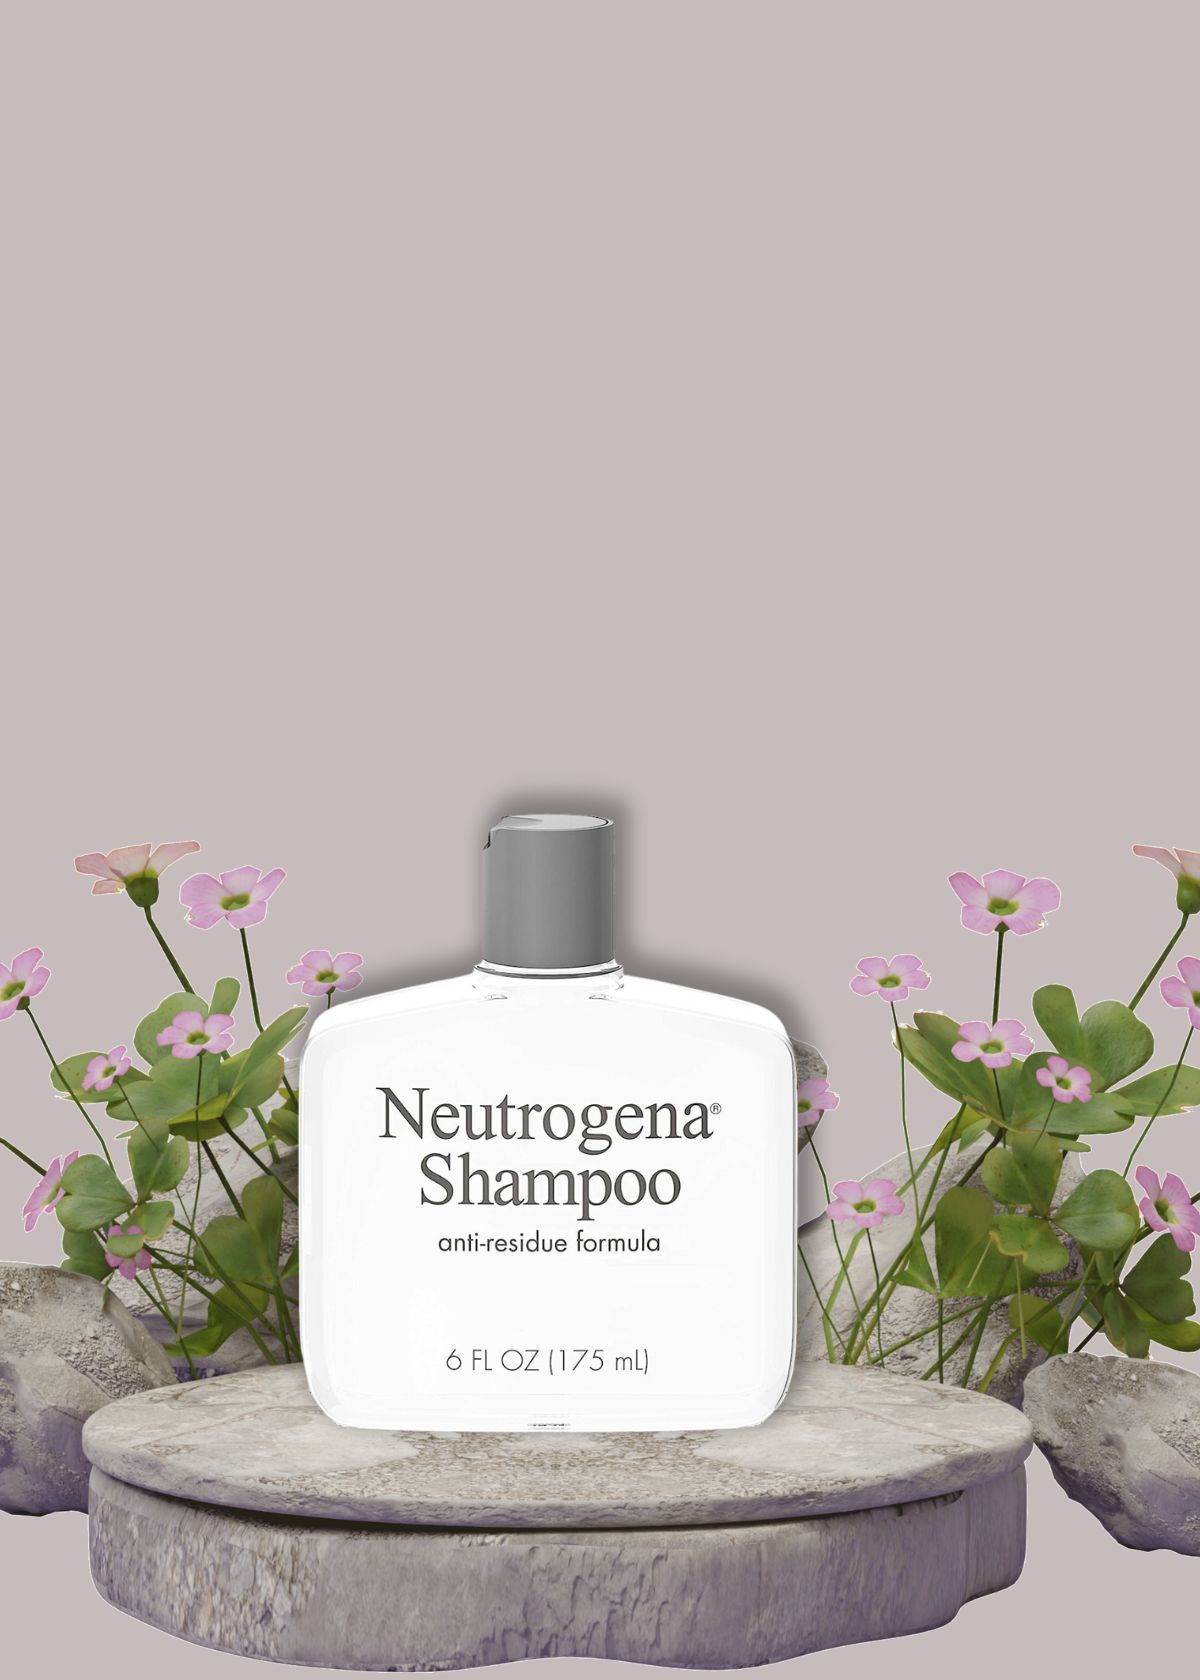 Get Rid of Build-Up Residue with Neutrogena Clarifying Shampoo